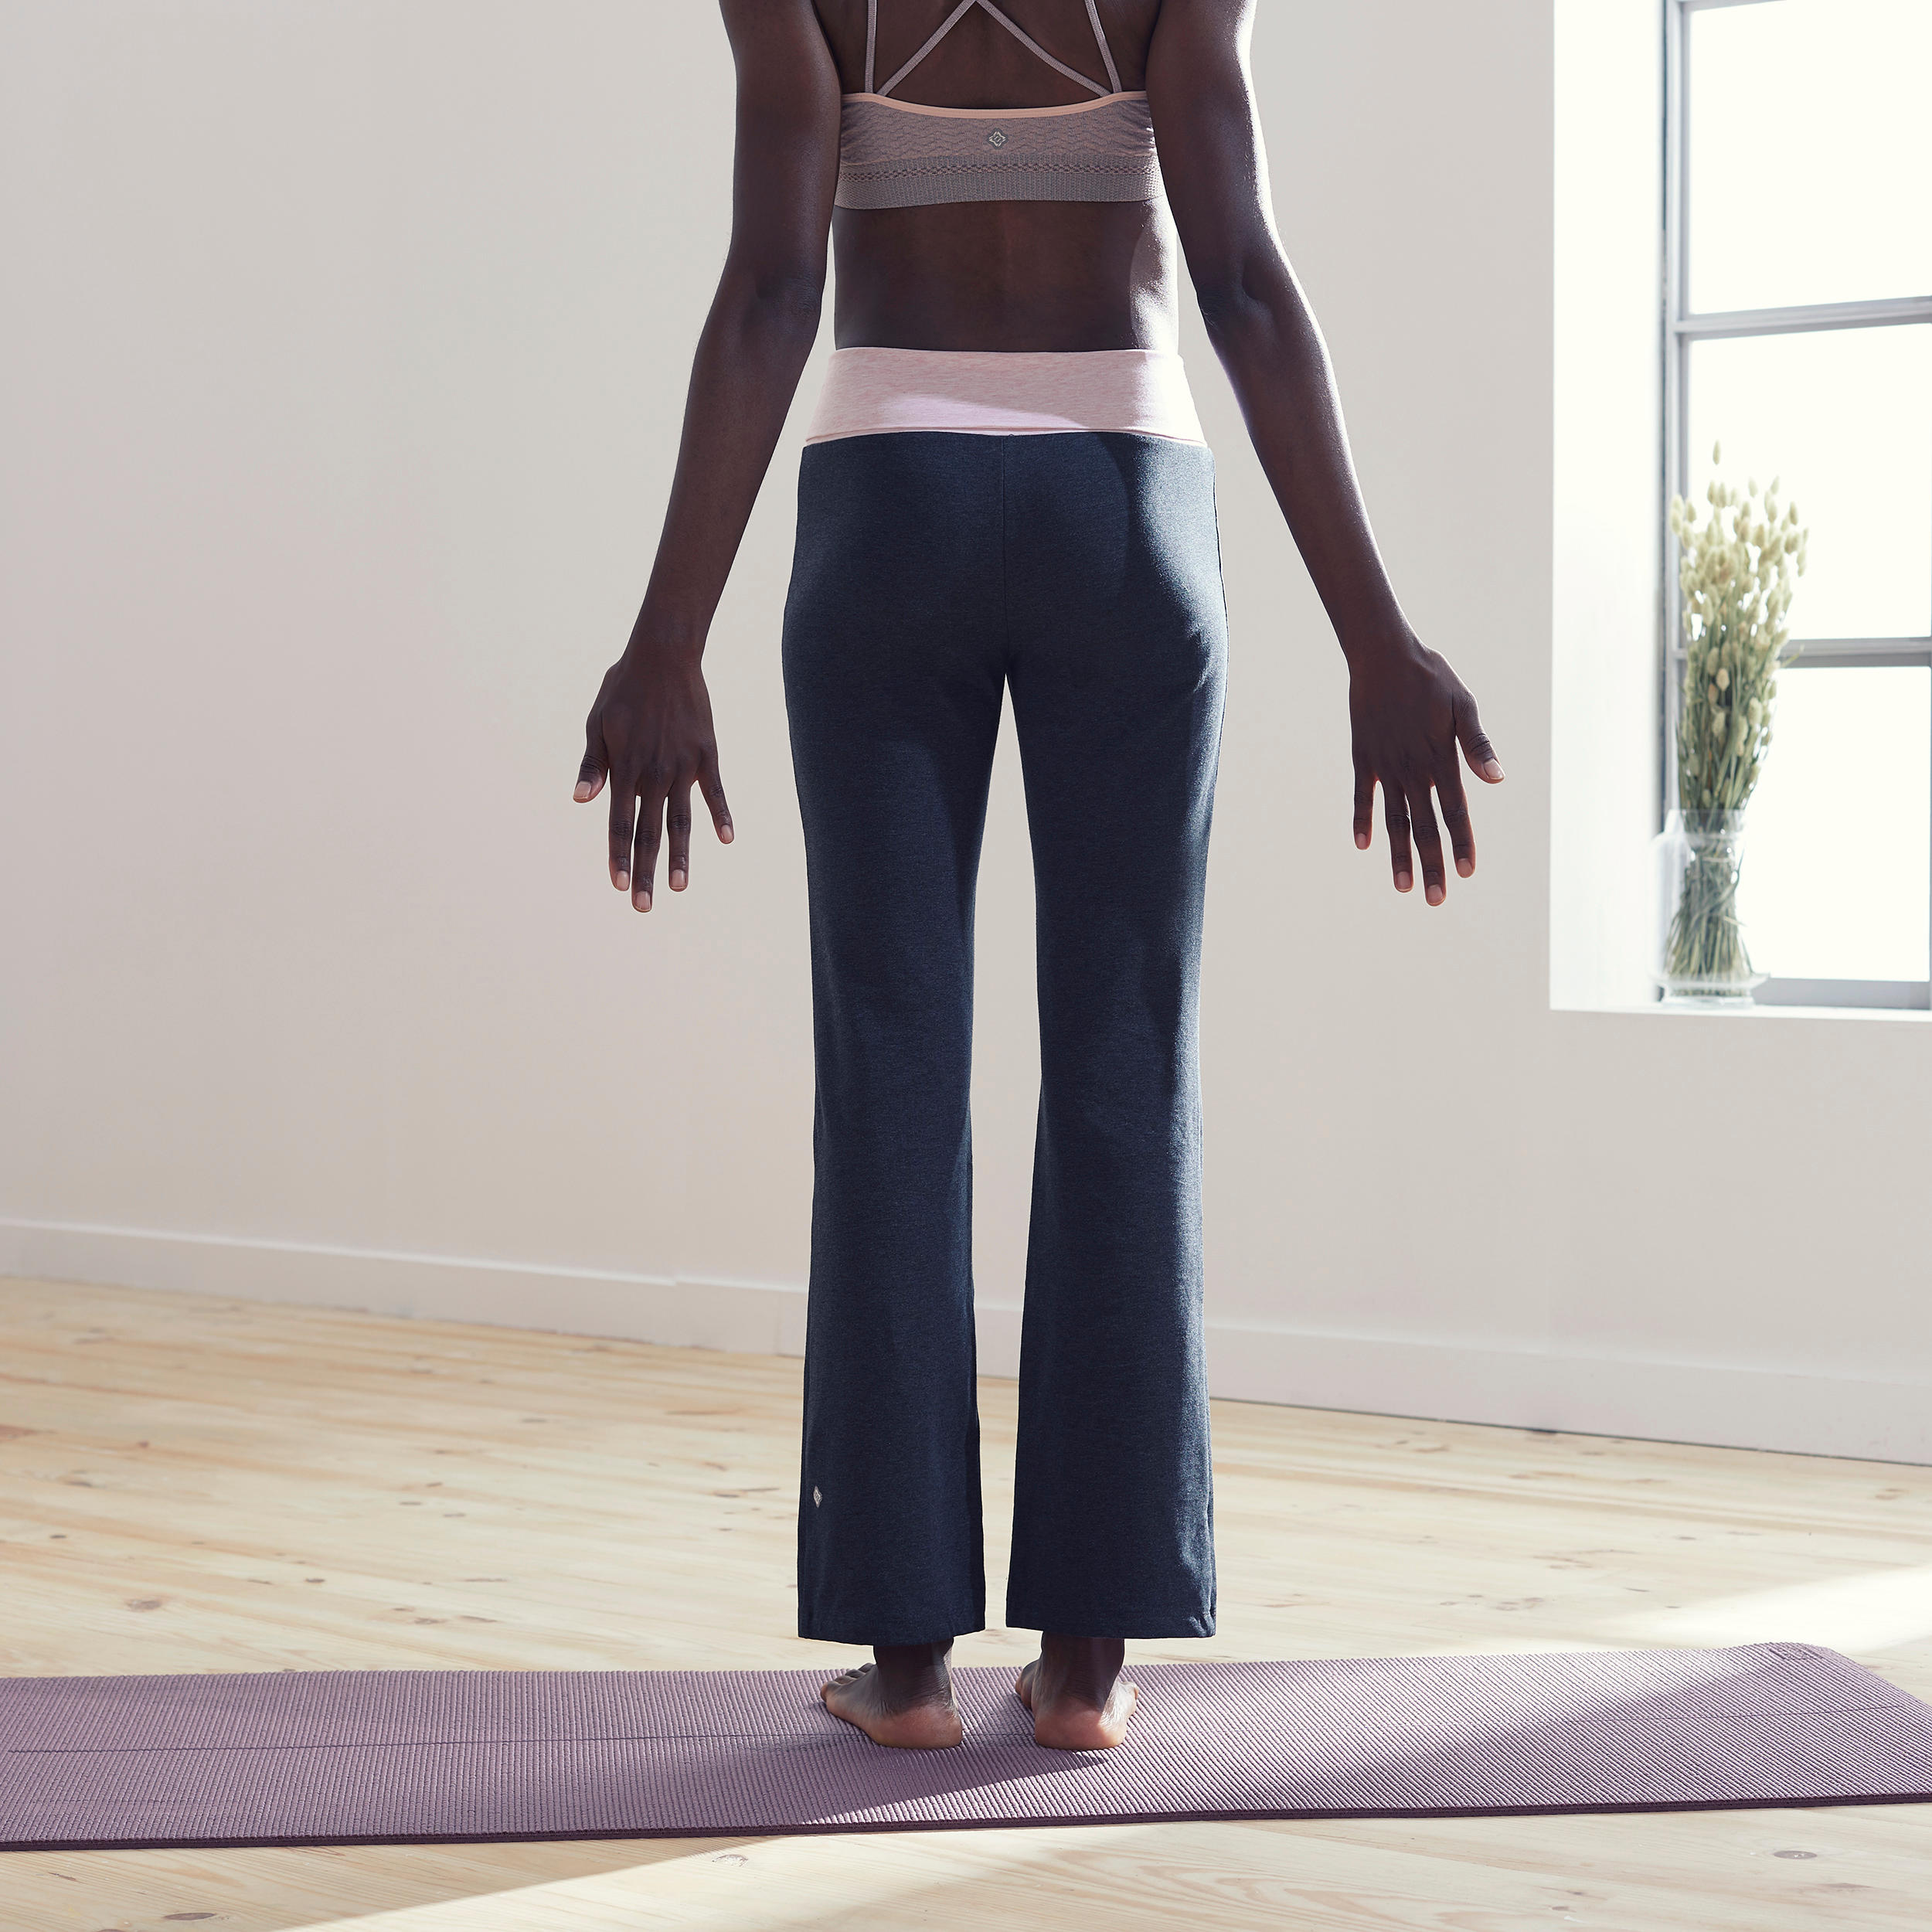 Women's Yoga Cotton Bottoms - Grey/Pink 5/7